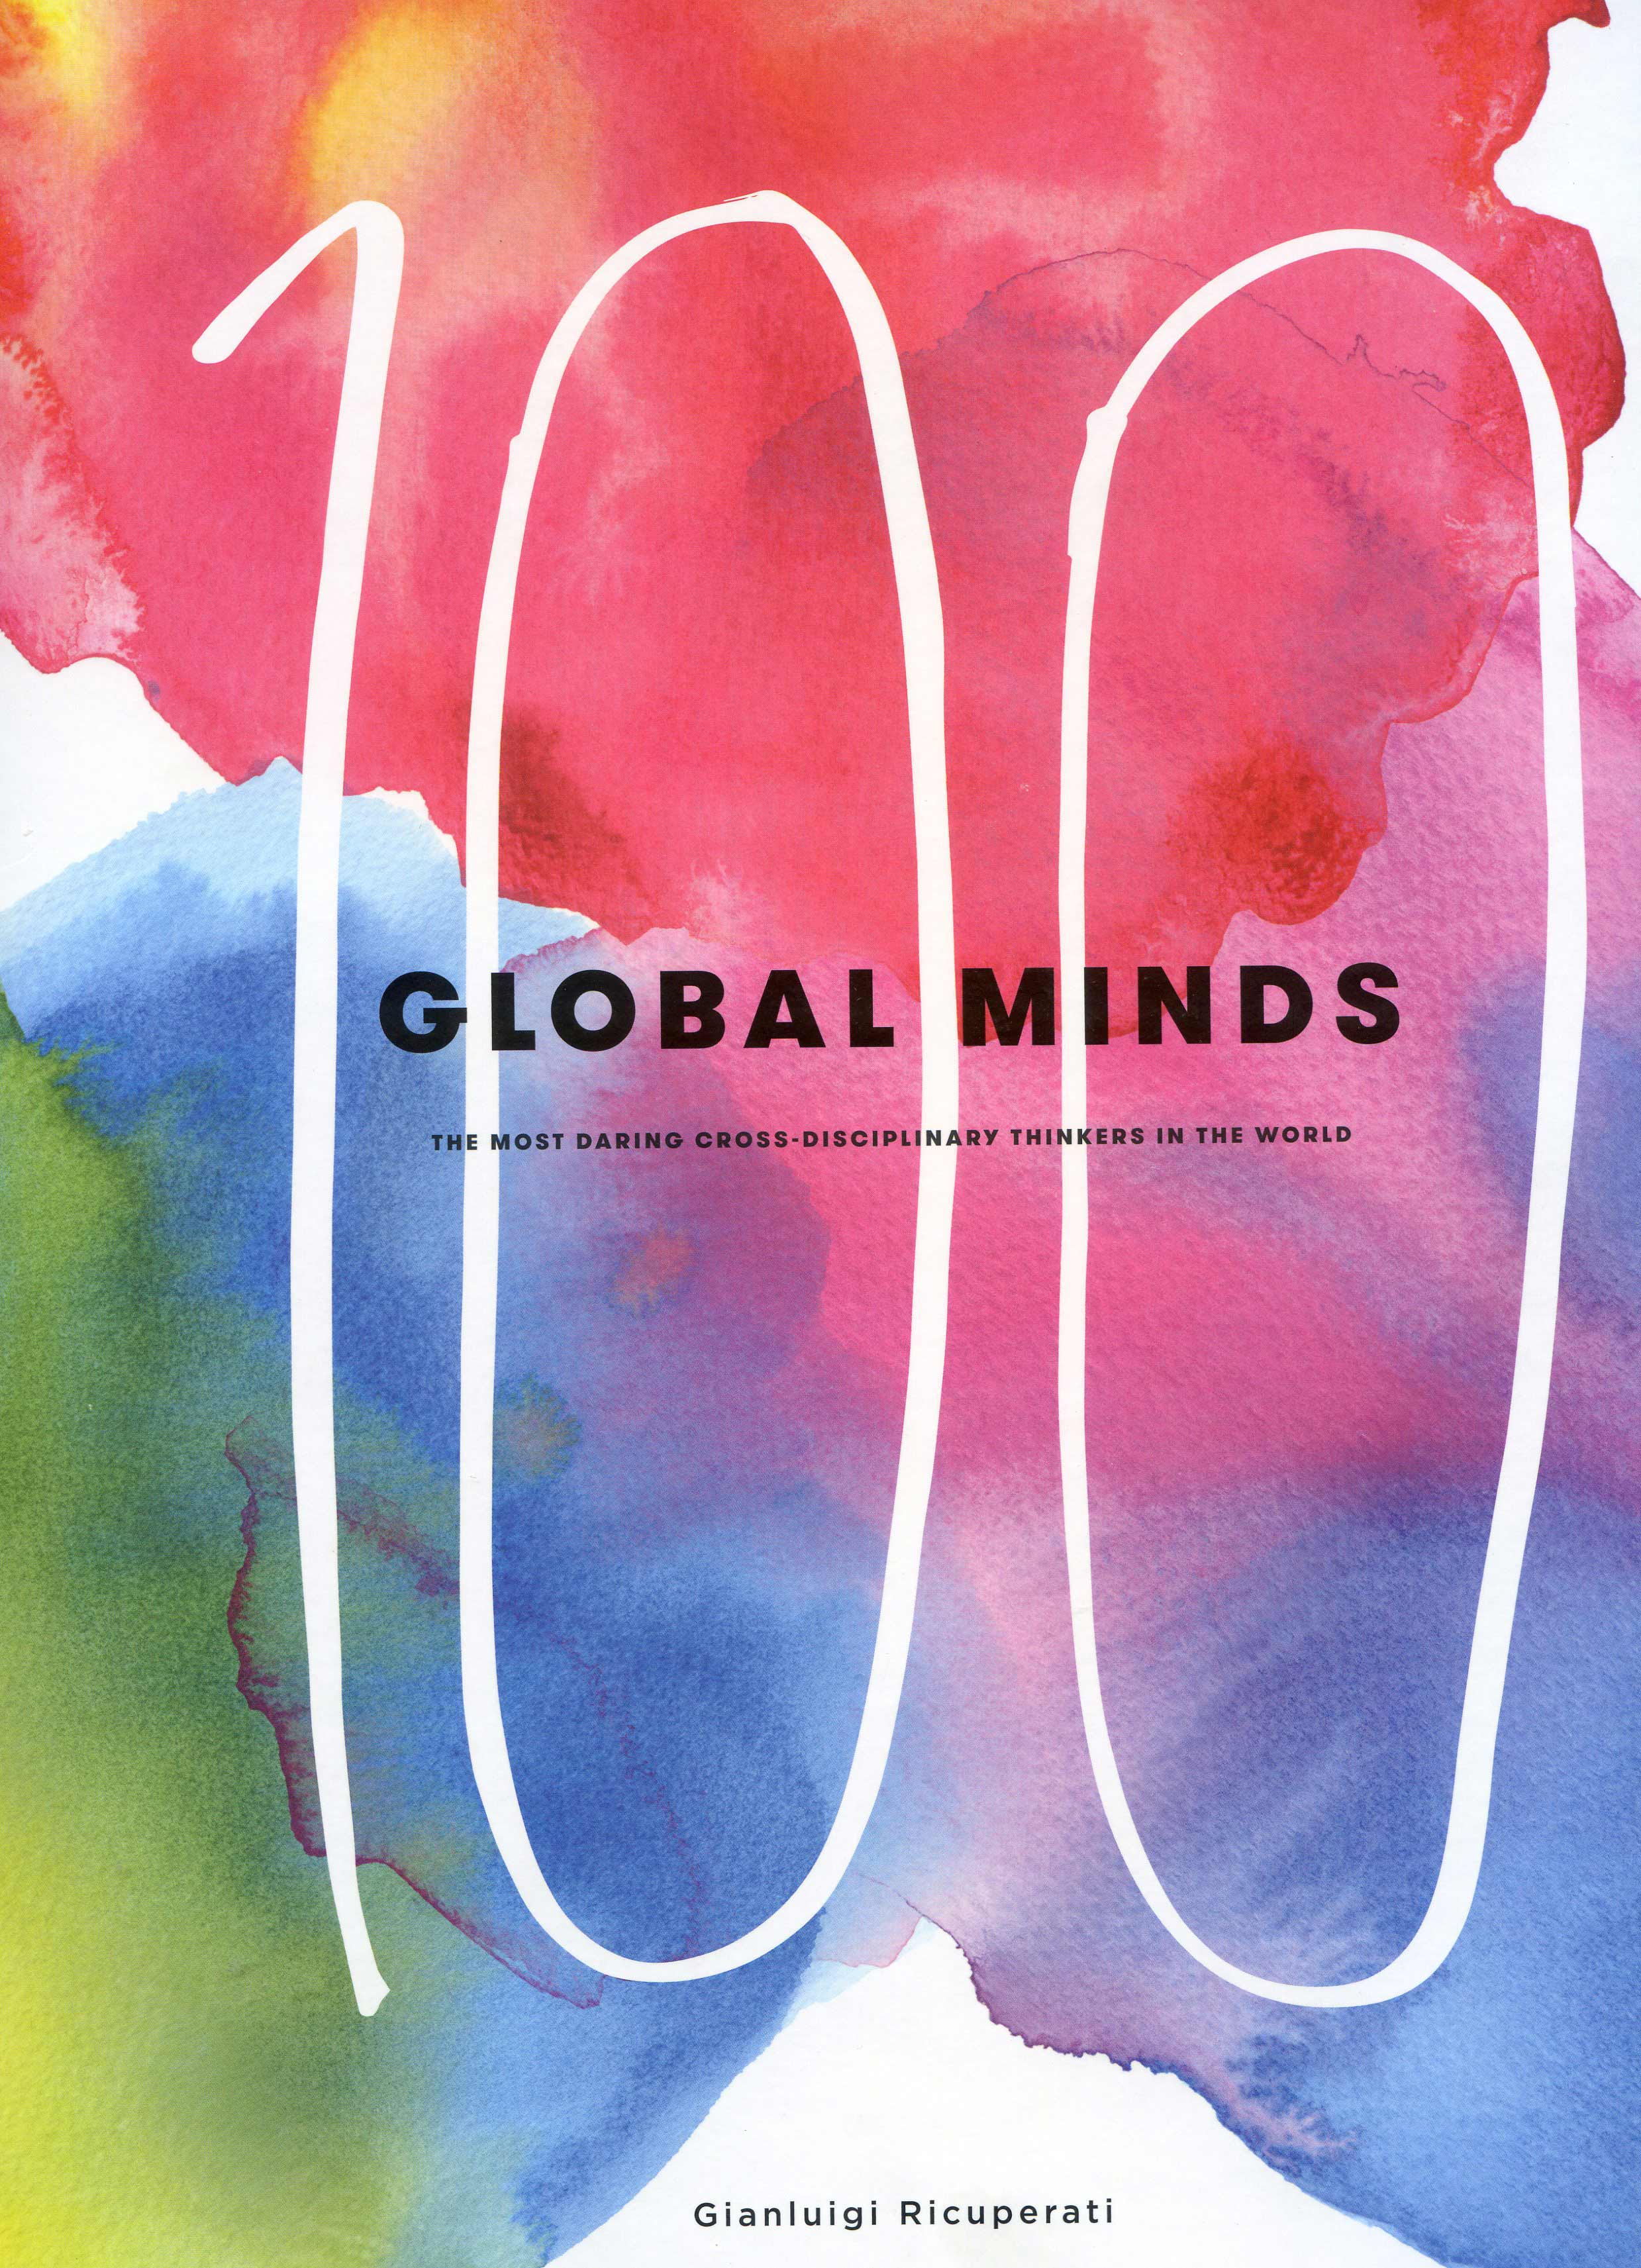 100 global minds - Julia Kristeva